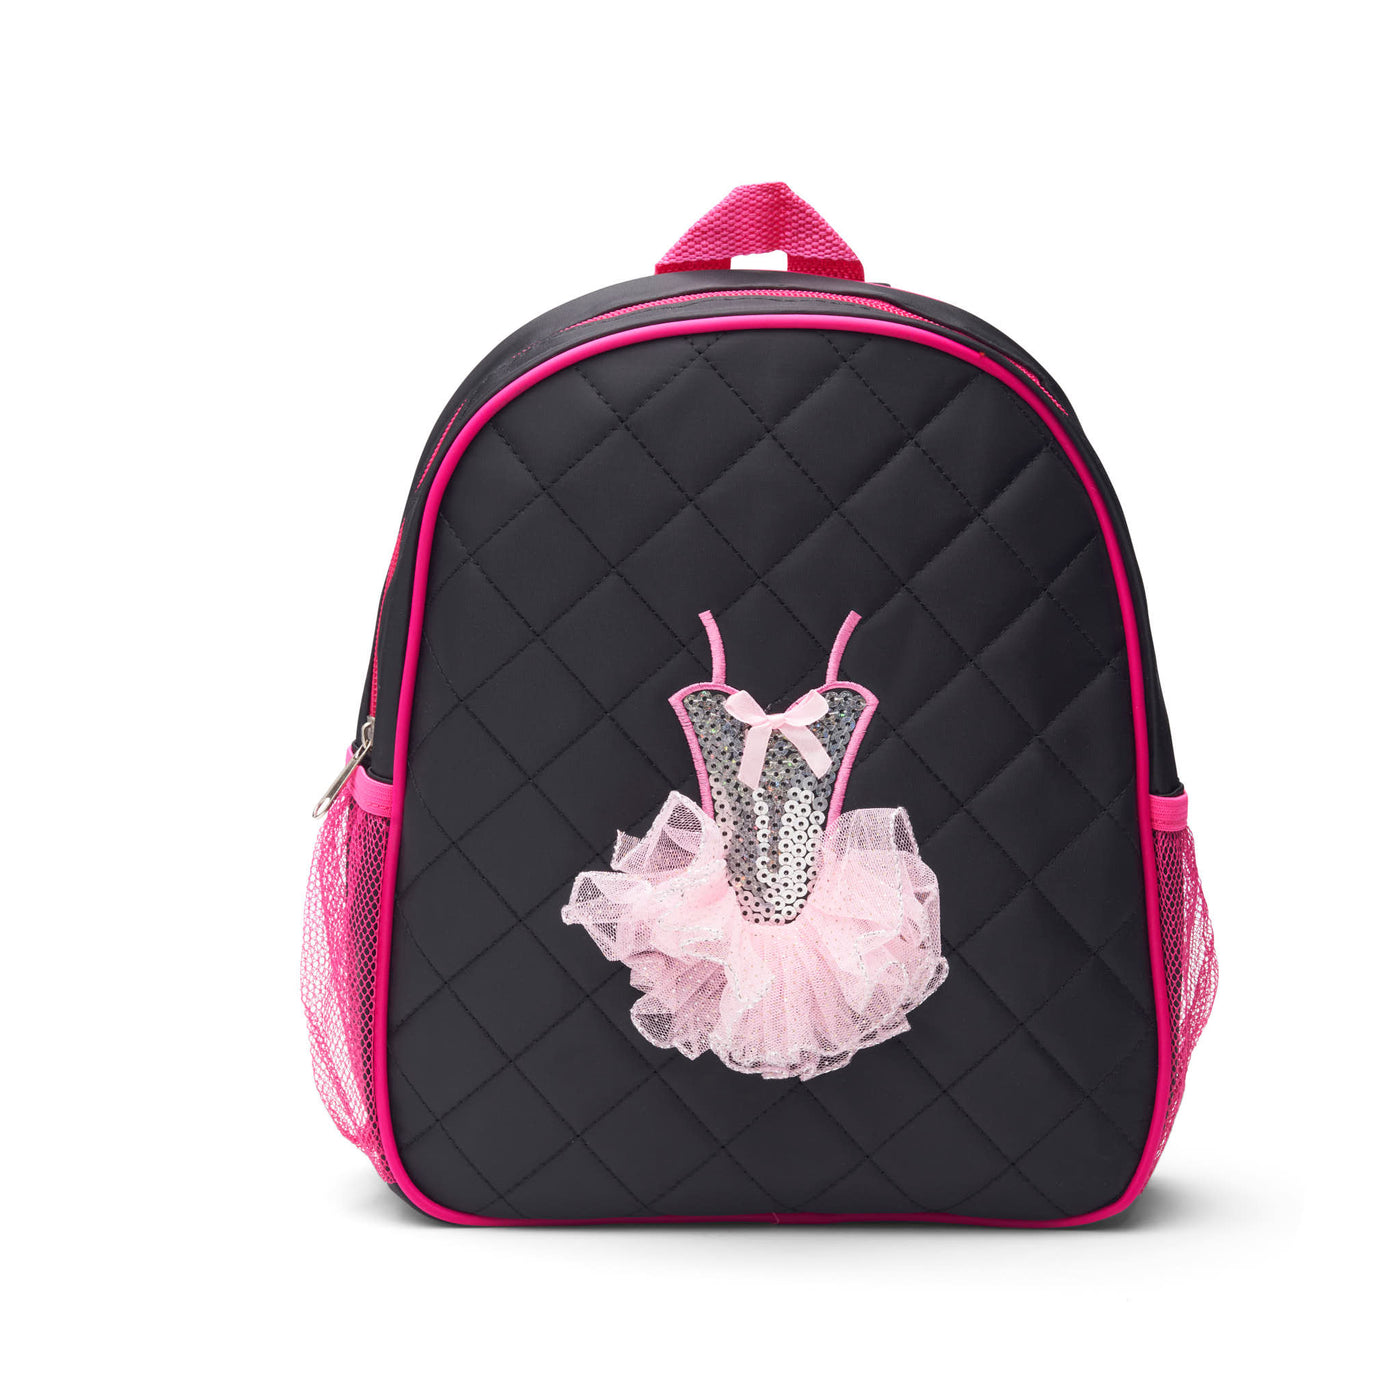 Dance Backpack Quilted Sequin Ballerina Tutu Backpack Medium Girls 3-9